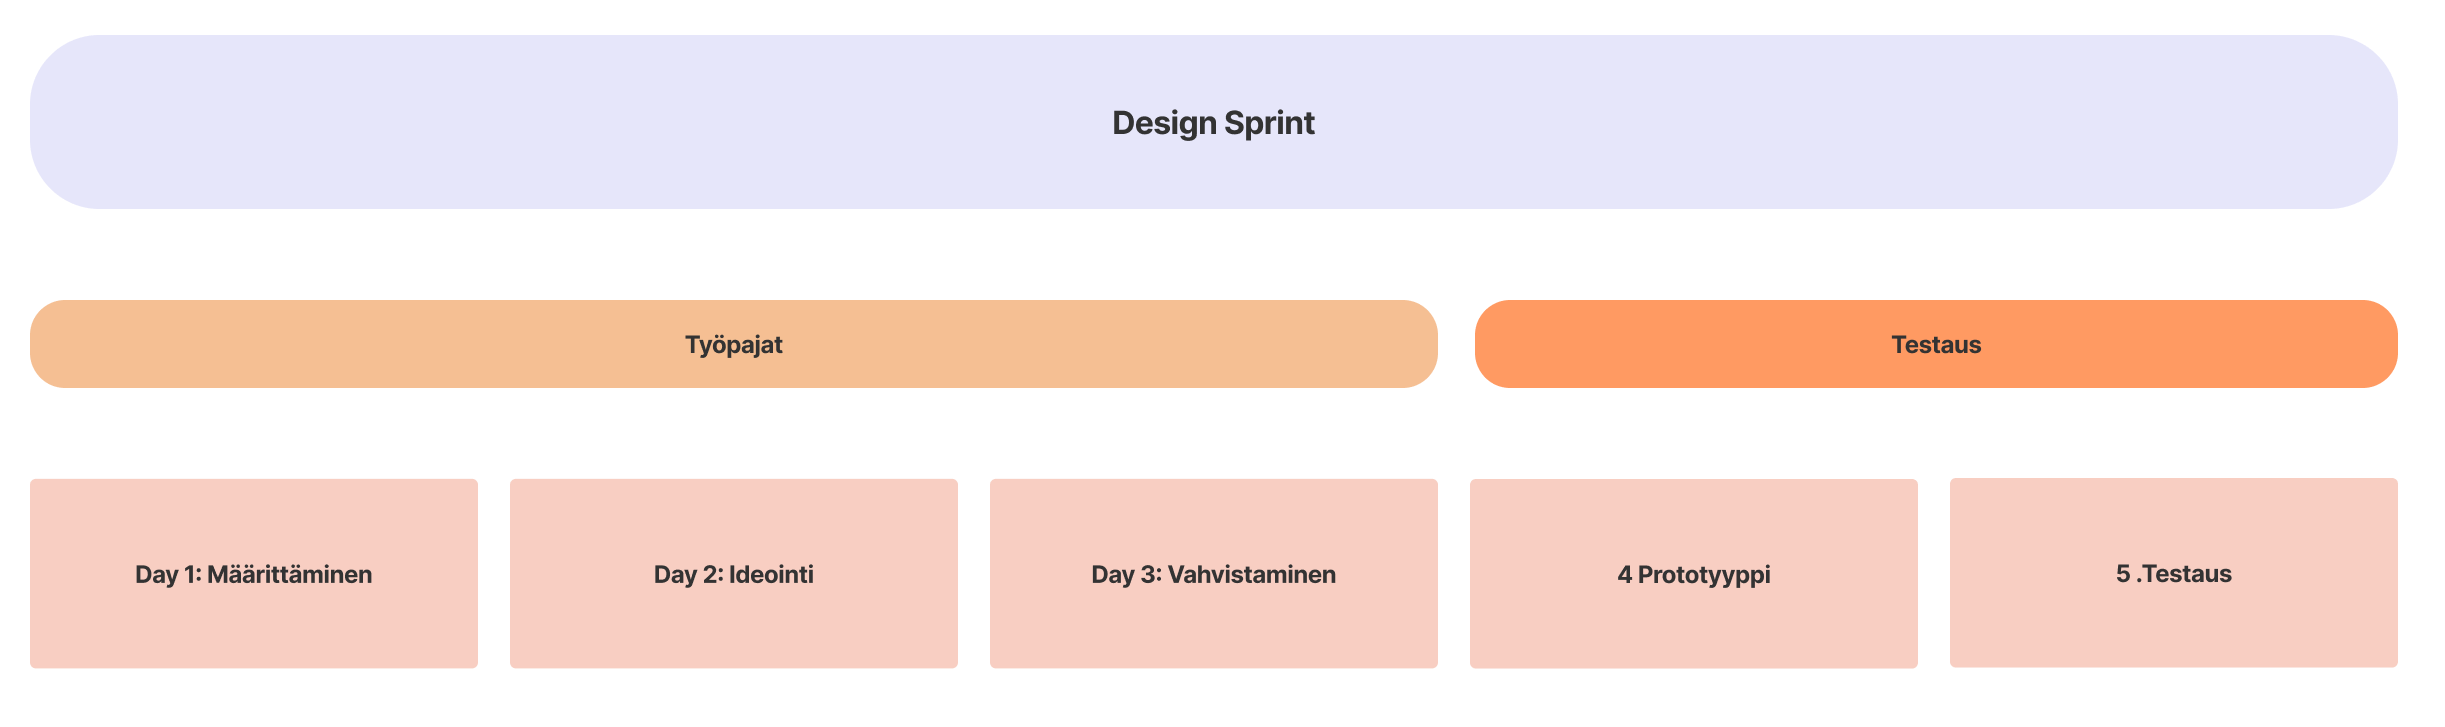 DesignSprint-prosessi-1